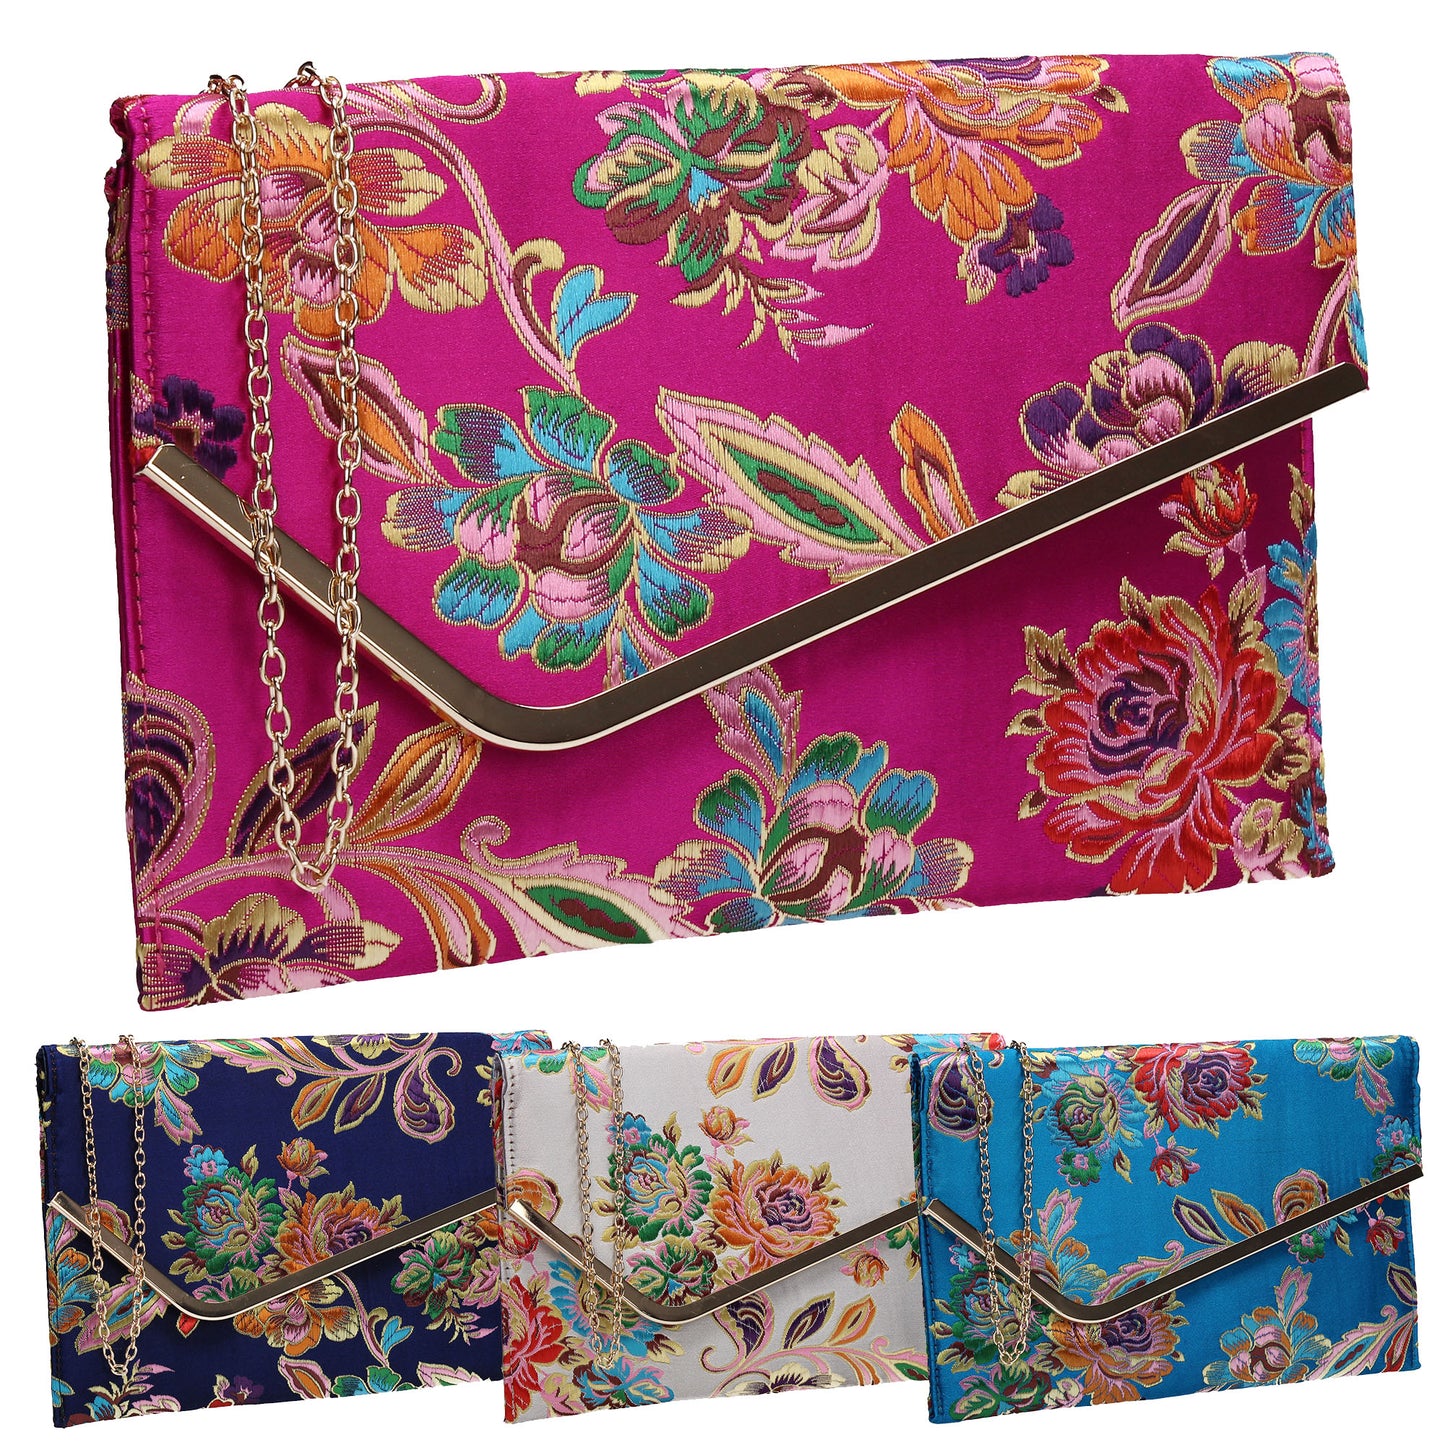 SWANKYSWANS Cedar Floral Slim Clutch Bag Teal Cute Cheap Clutch Bag For Weddings School and Work